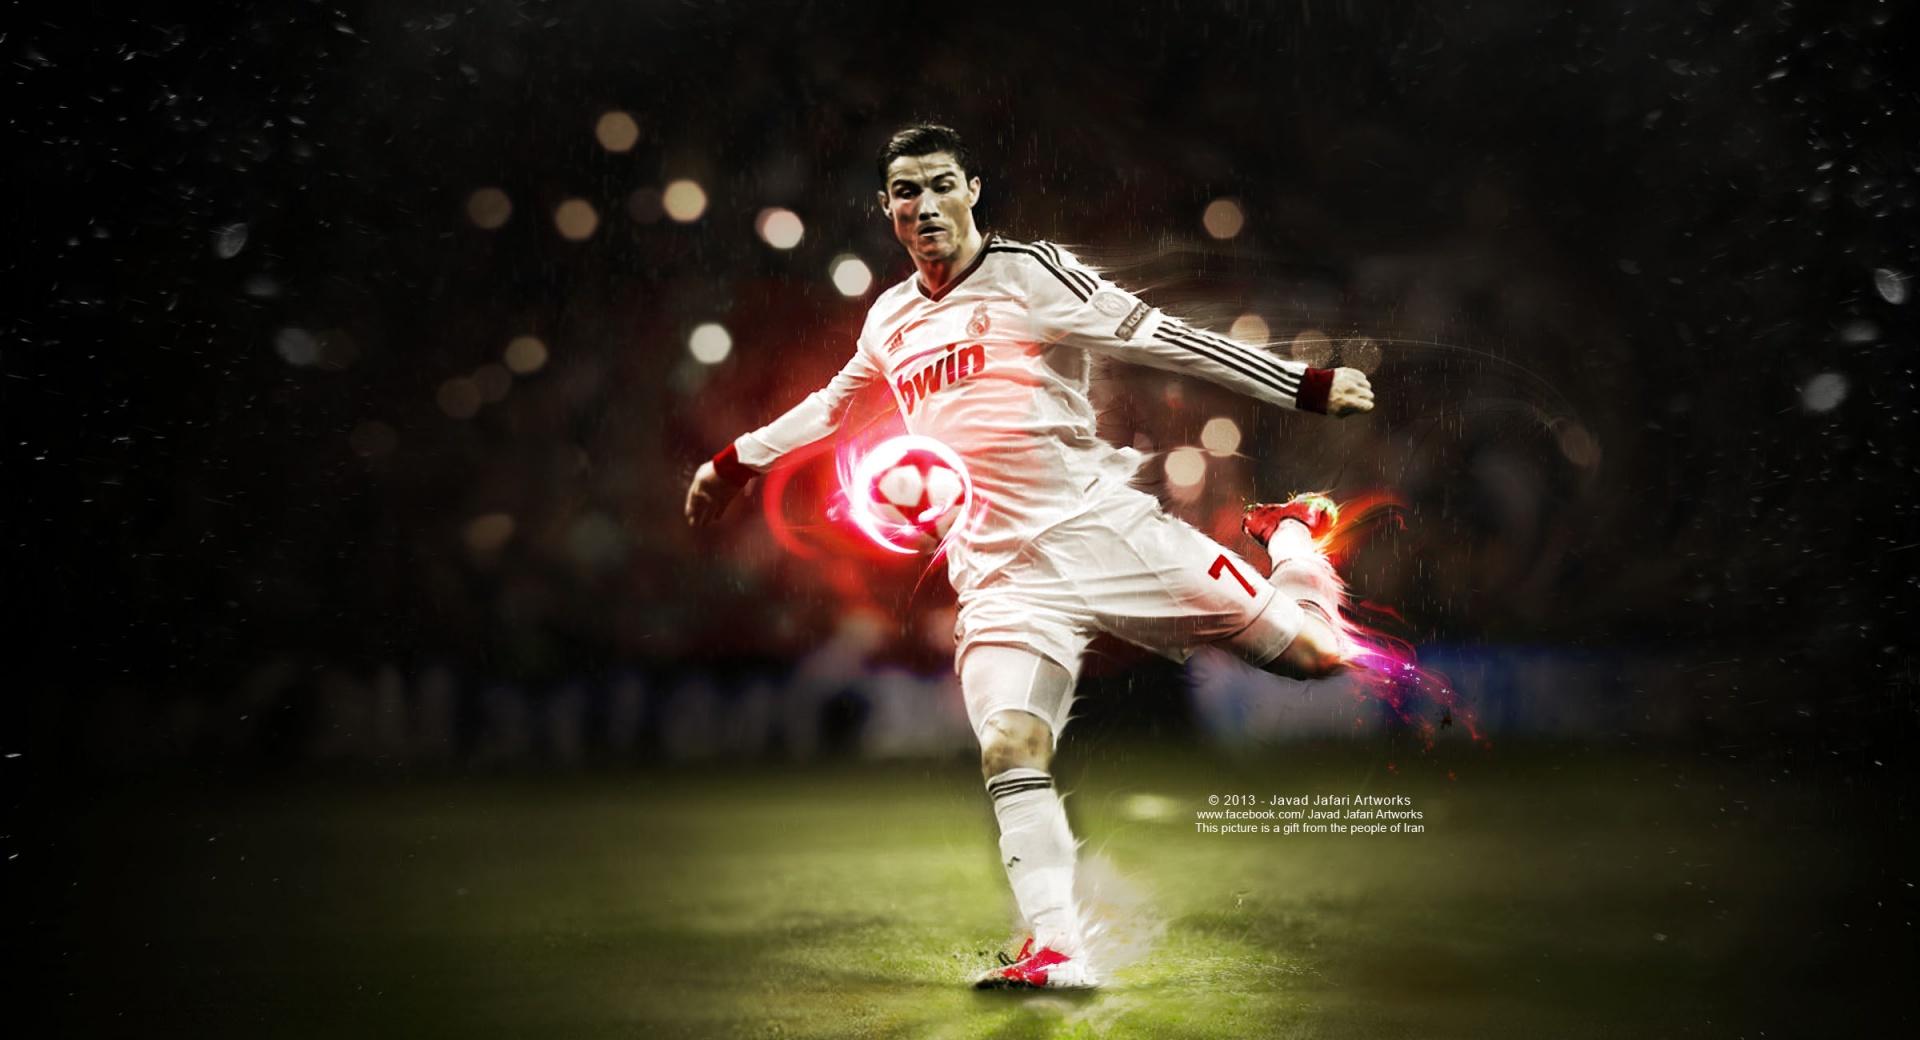 Ronaldo Kick at 1600 x 1200 size wallpapers HD quality